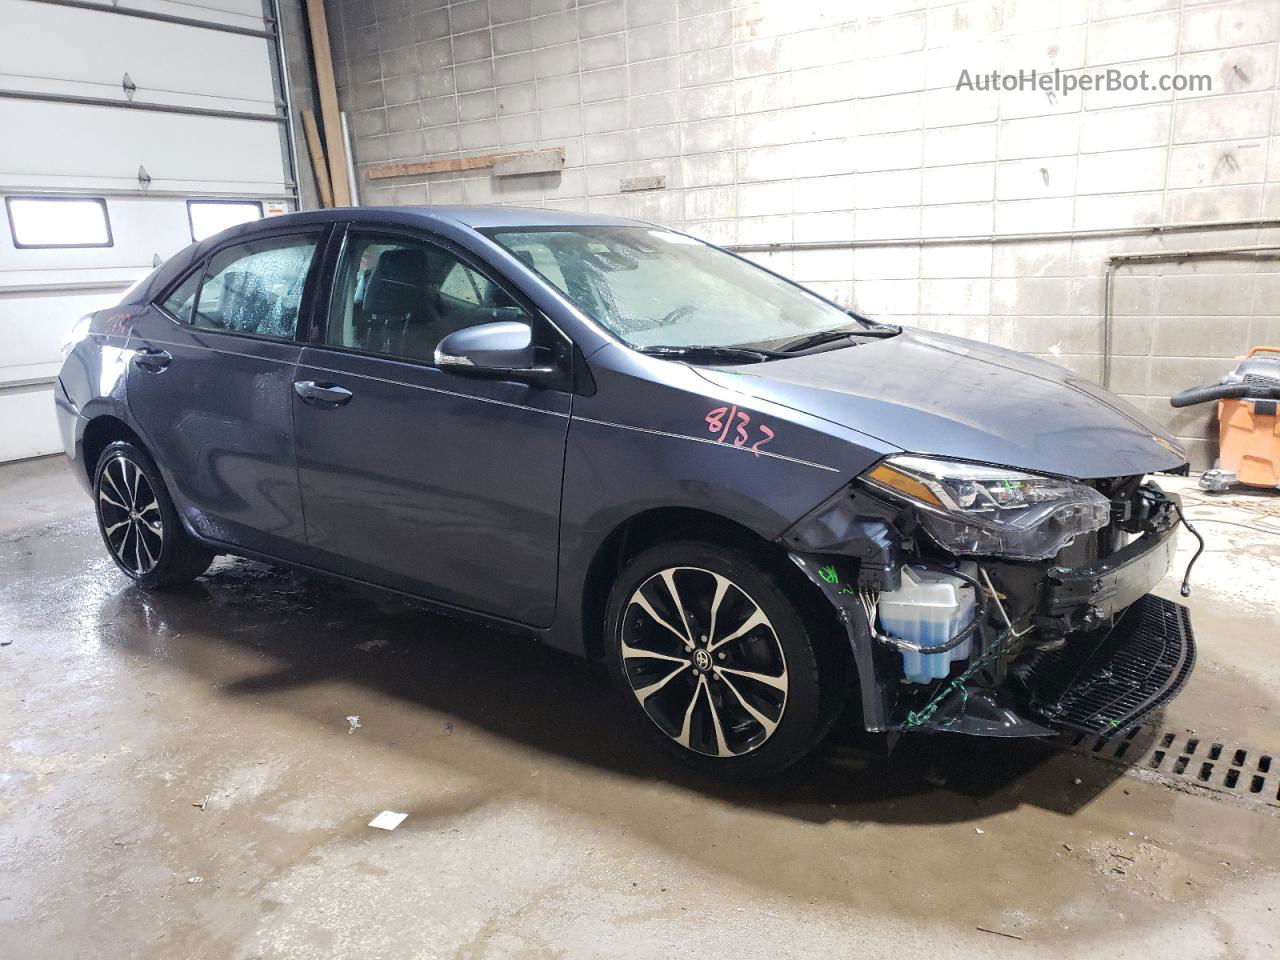 2019 Toyota Corolla L Синий vin: 5YFBURHE3KP934311